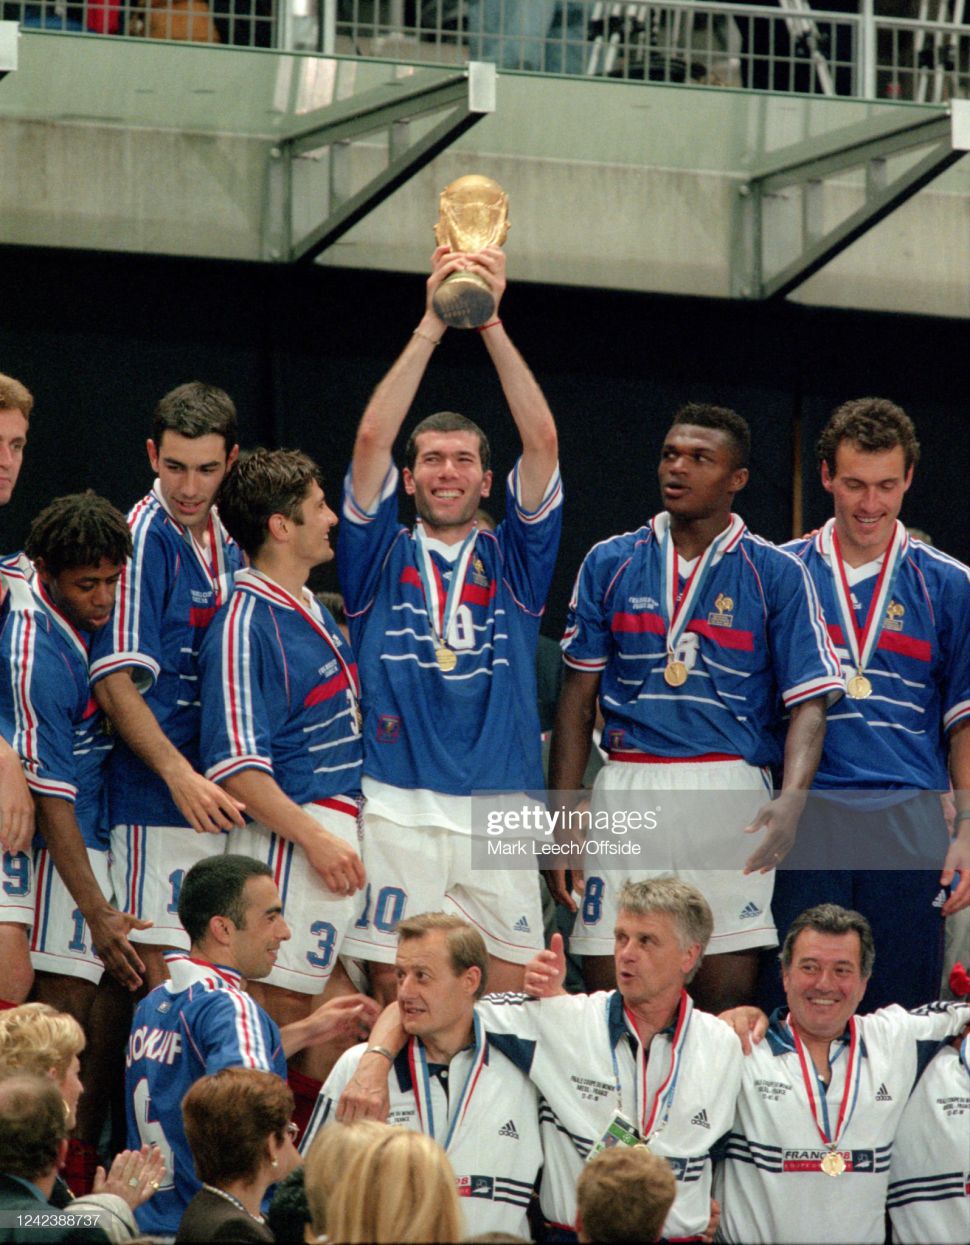 Áo đấu France World Cup 1998 1999 2000 home blue shirt jersey Adidas